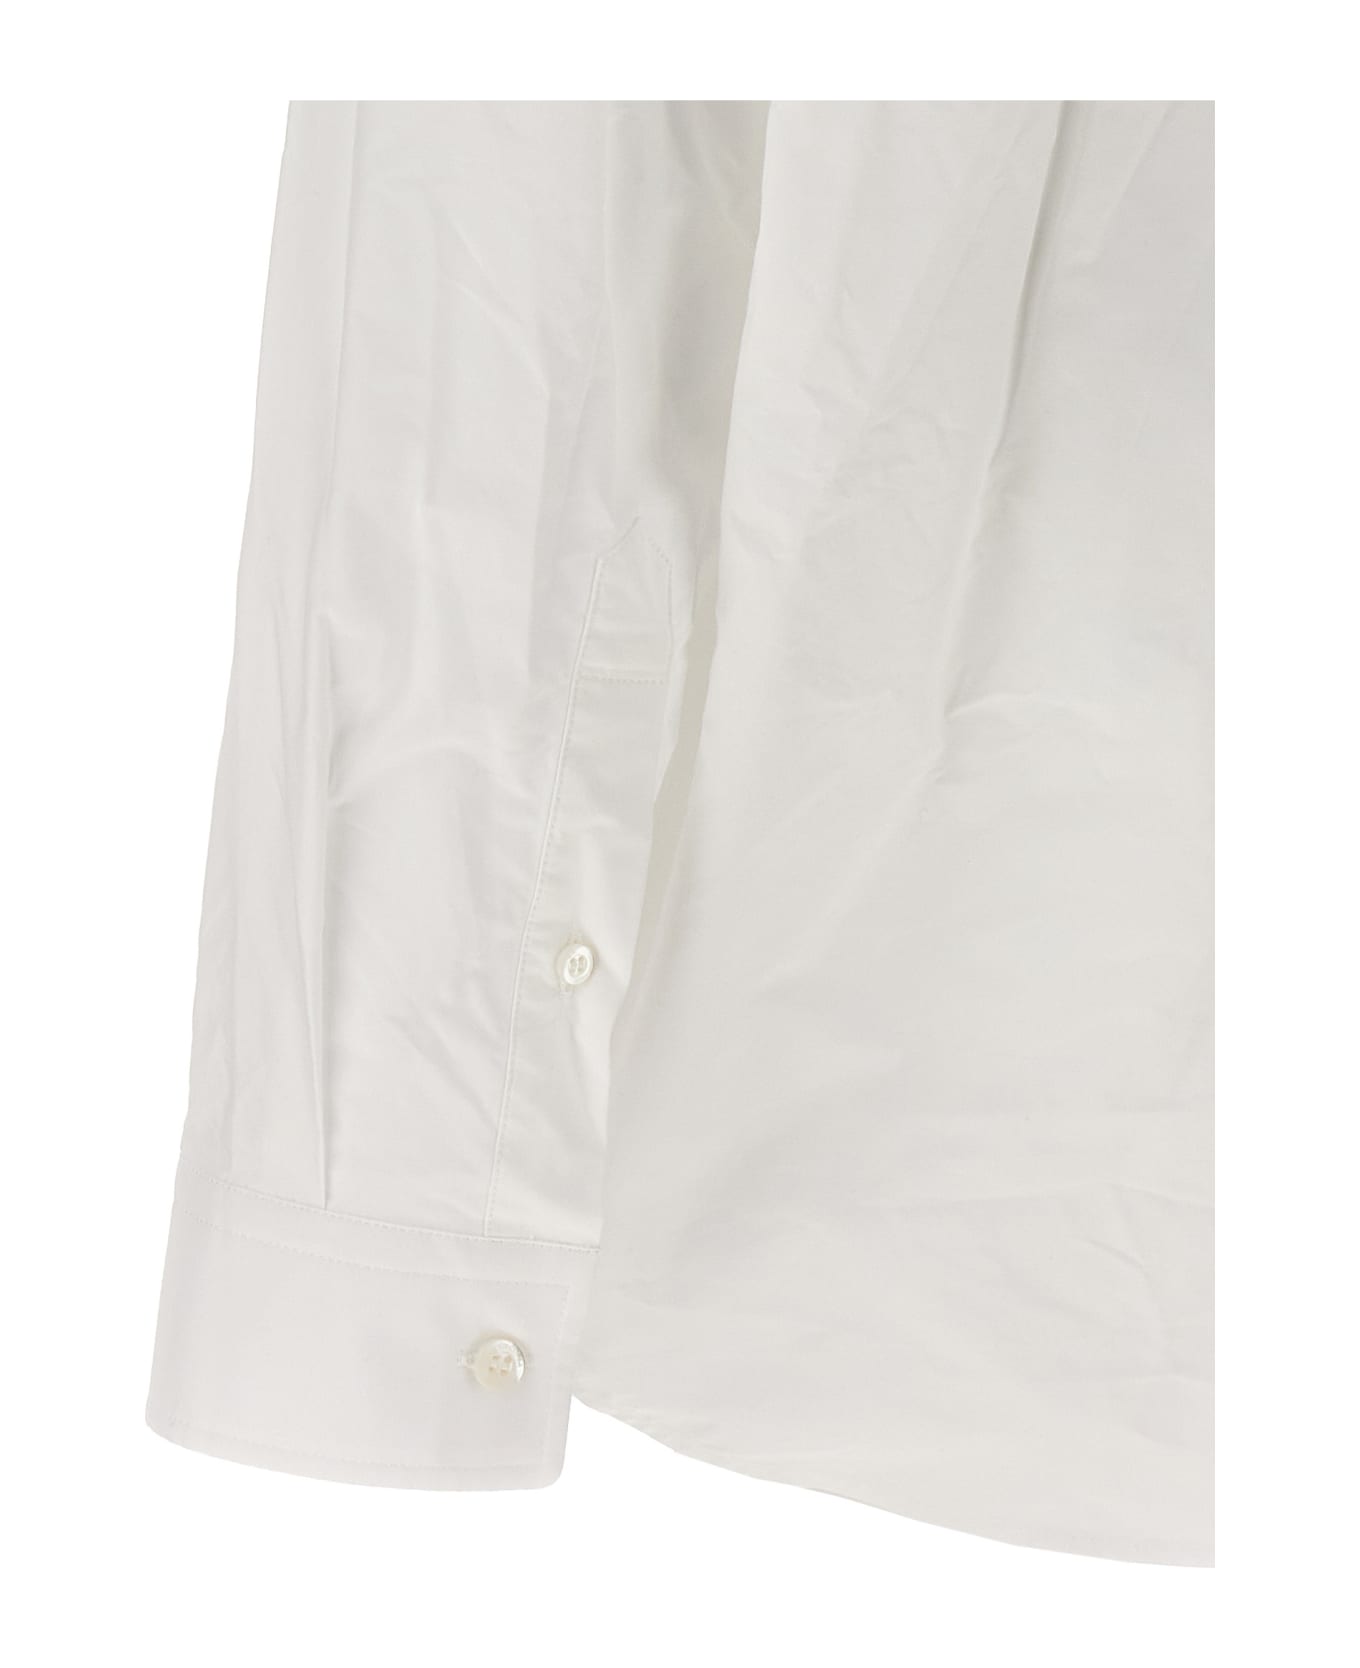 Balenciaga Cocoon Shirt - WHITE